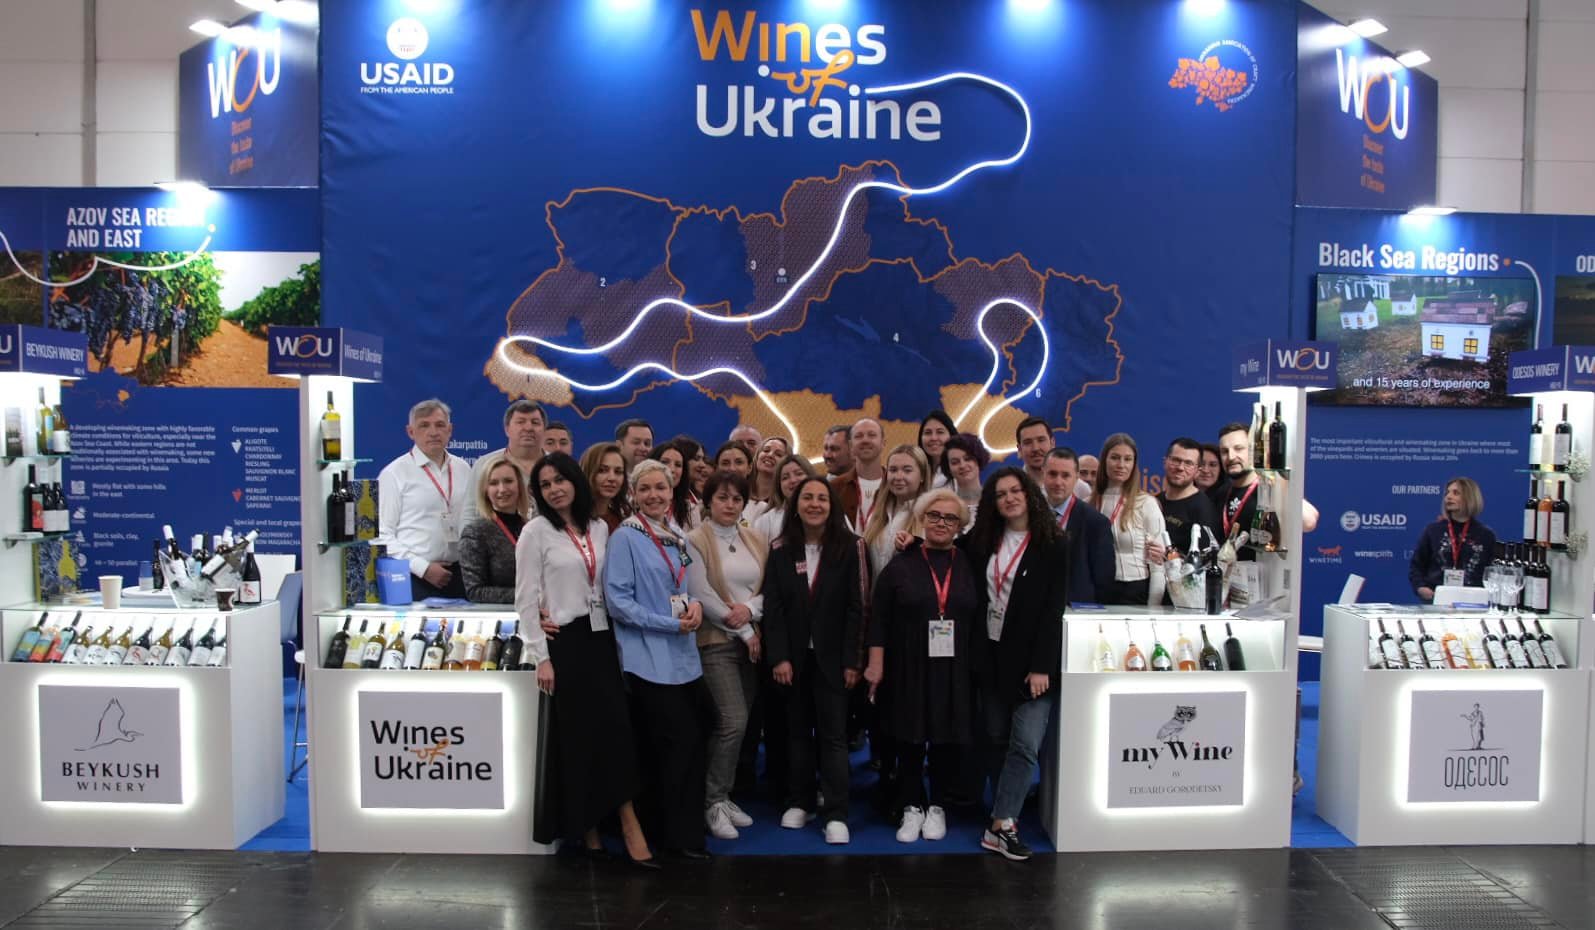 Wines of Ukraine Stand & Stand with Ukraine